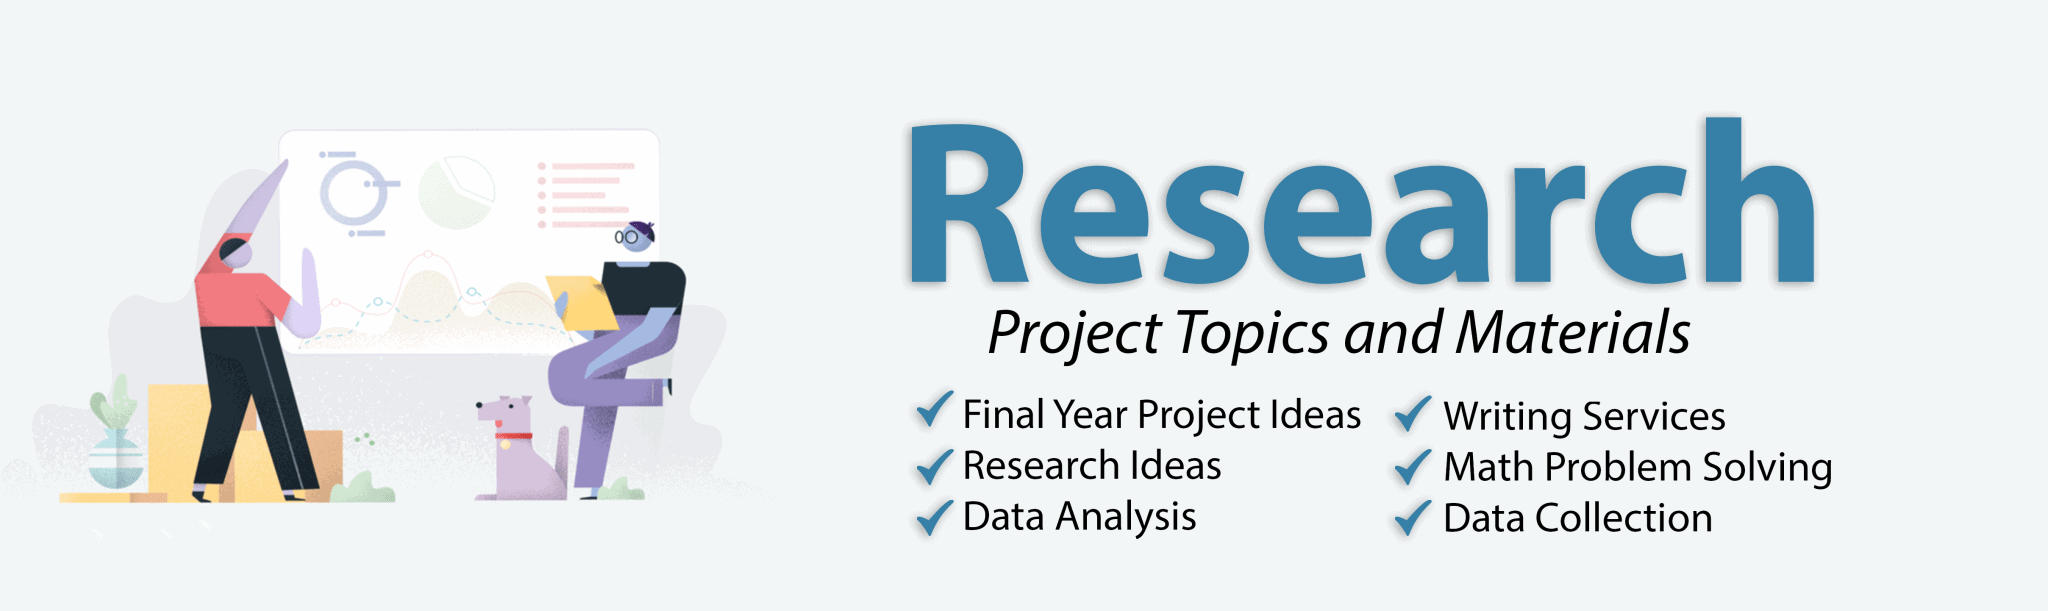 topics for research undergraduate